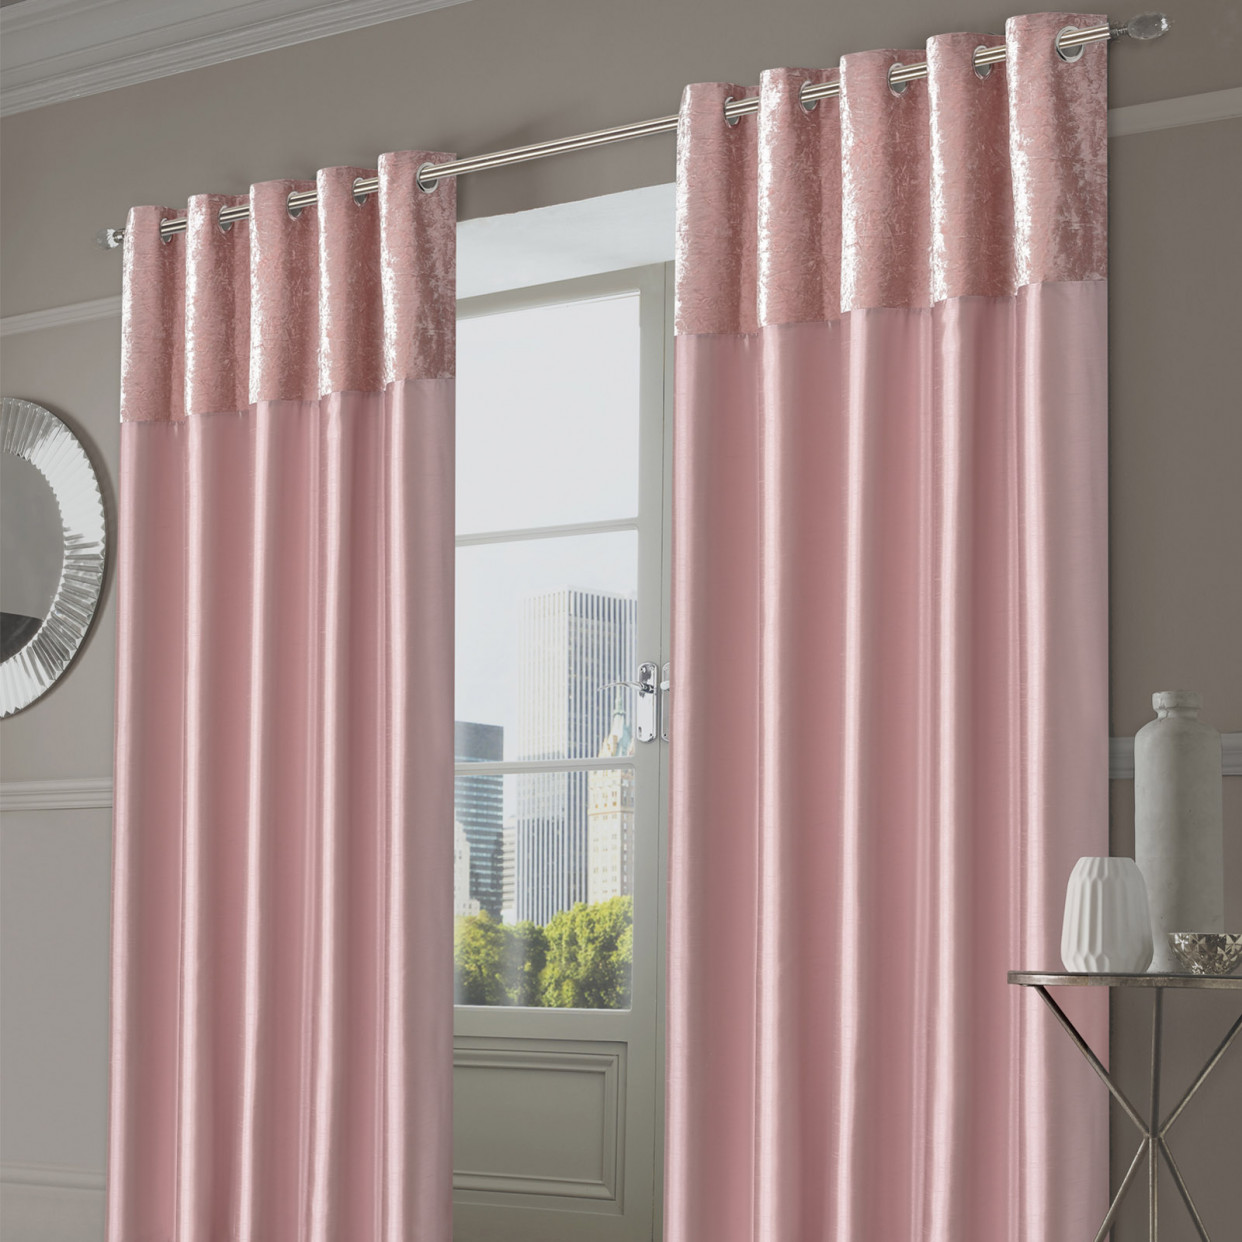 Sienna Home Manhattan Crushed Velvet Band Eyelet Curtains - Blush Pink, 90" x 54">